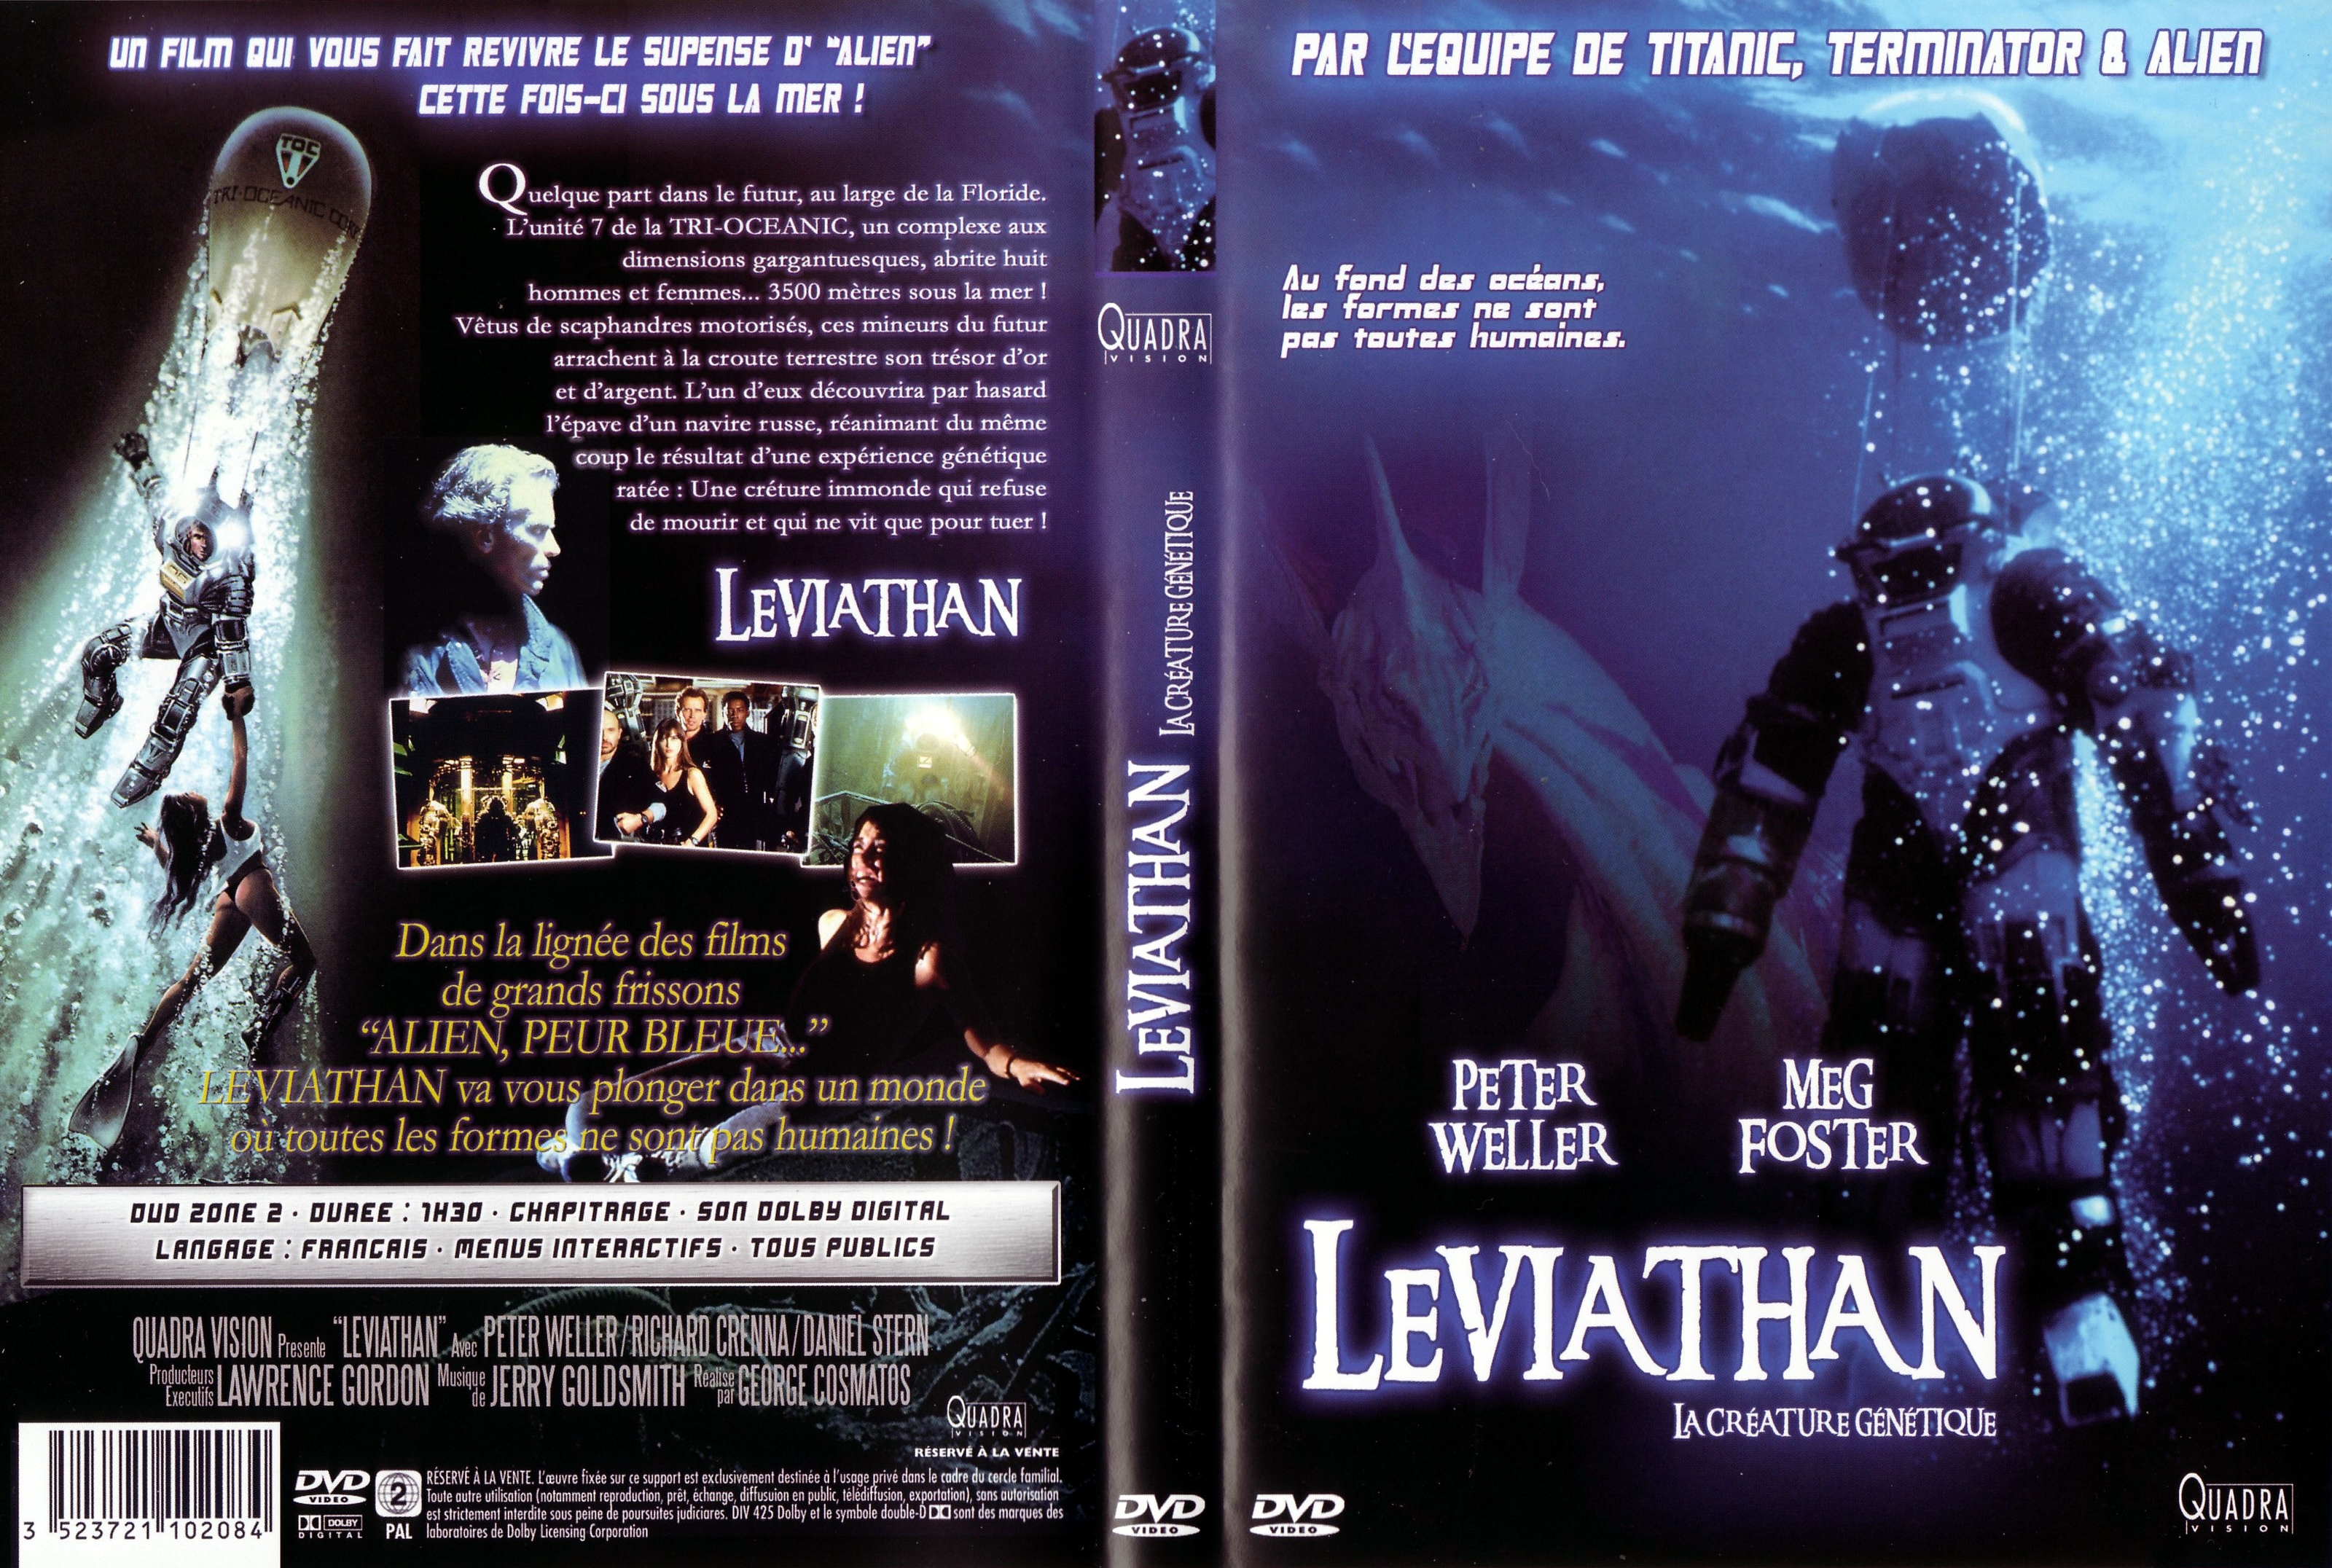 Jaquette DVD Leviathan v4